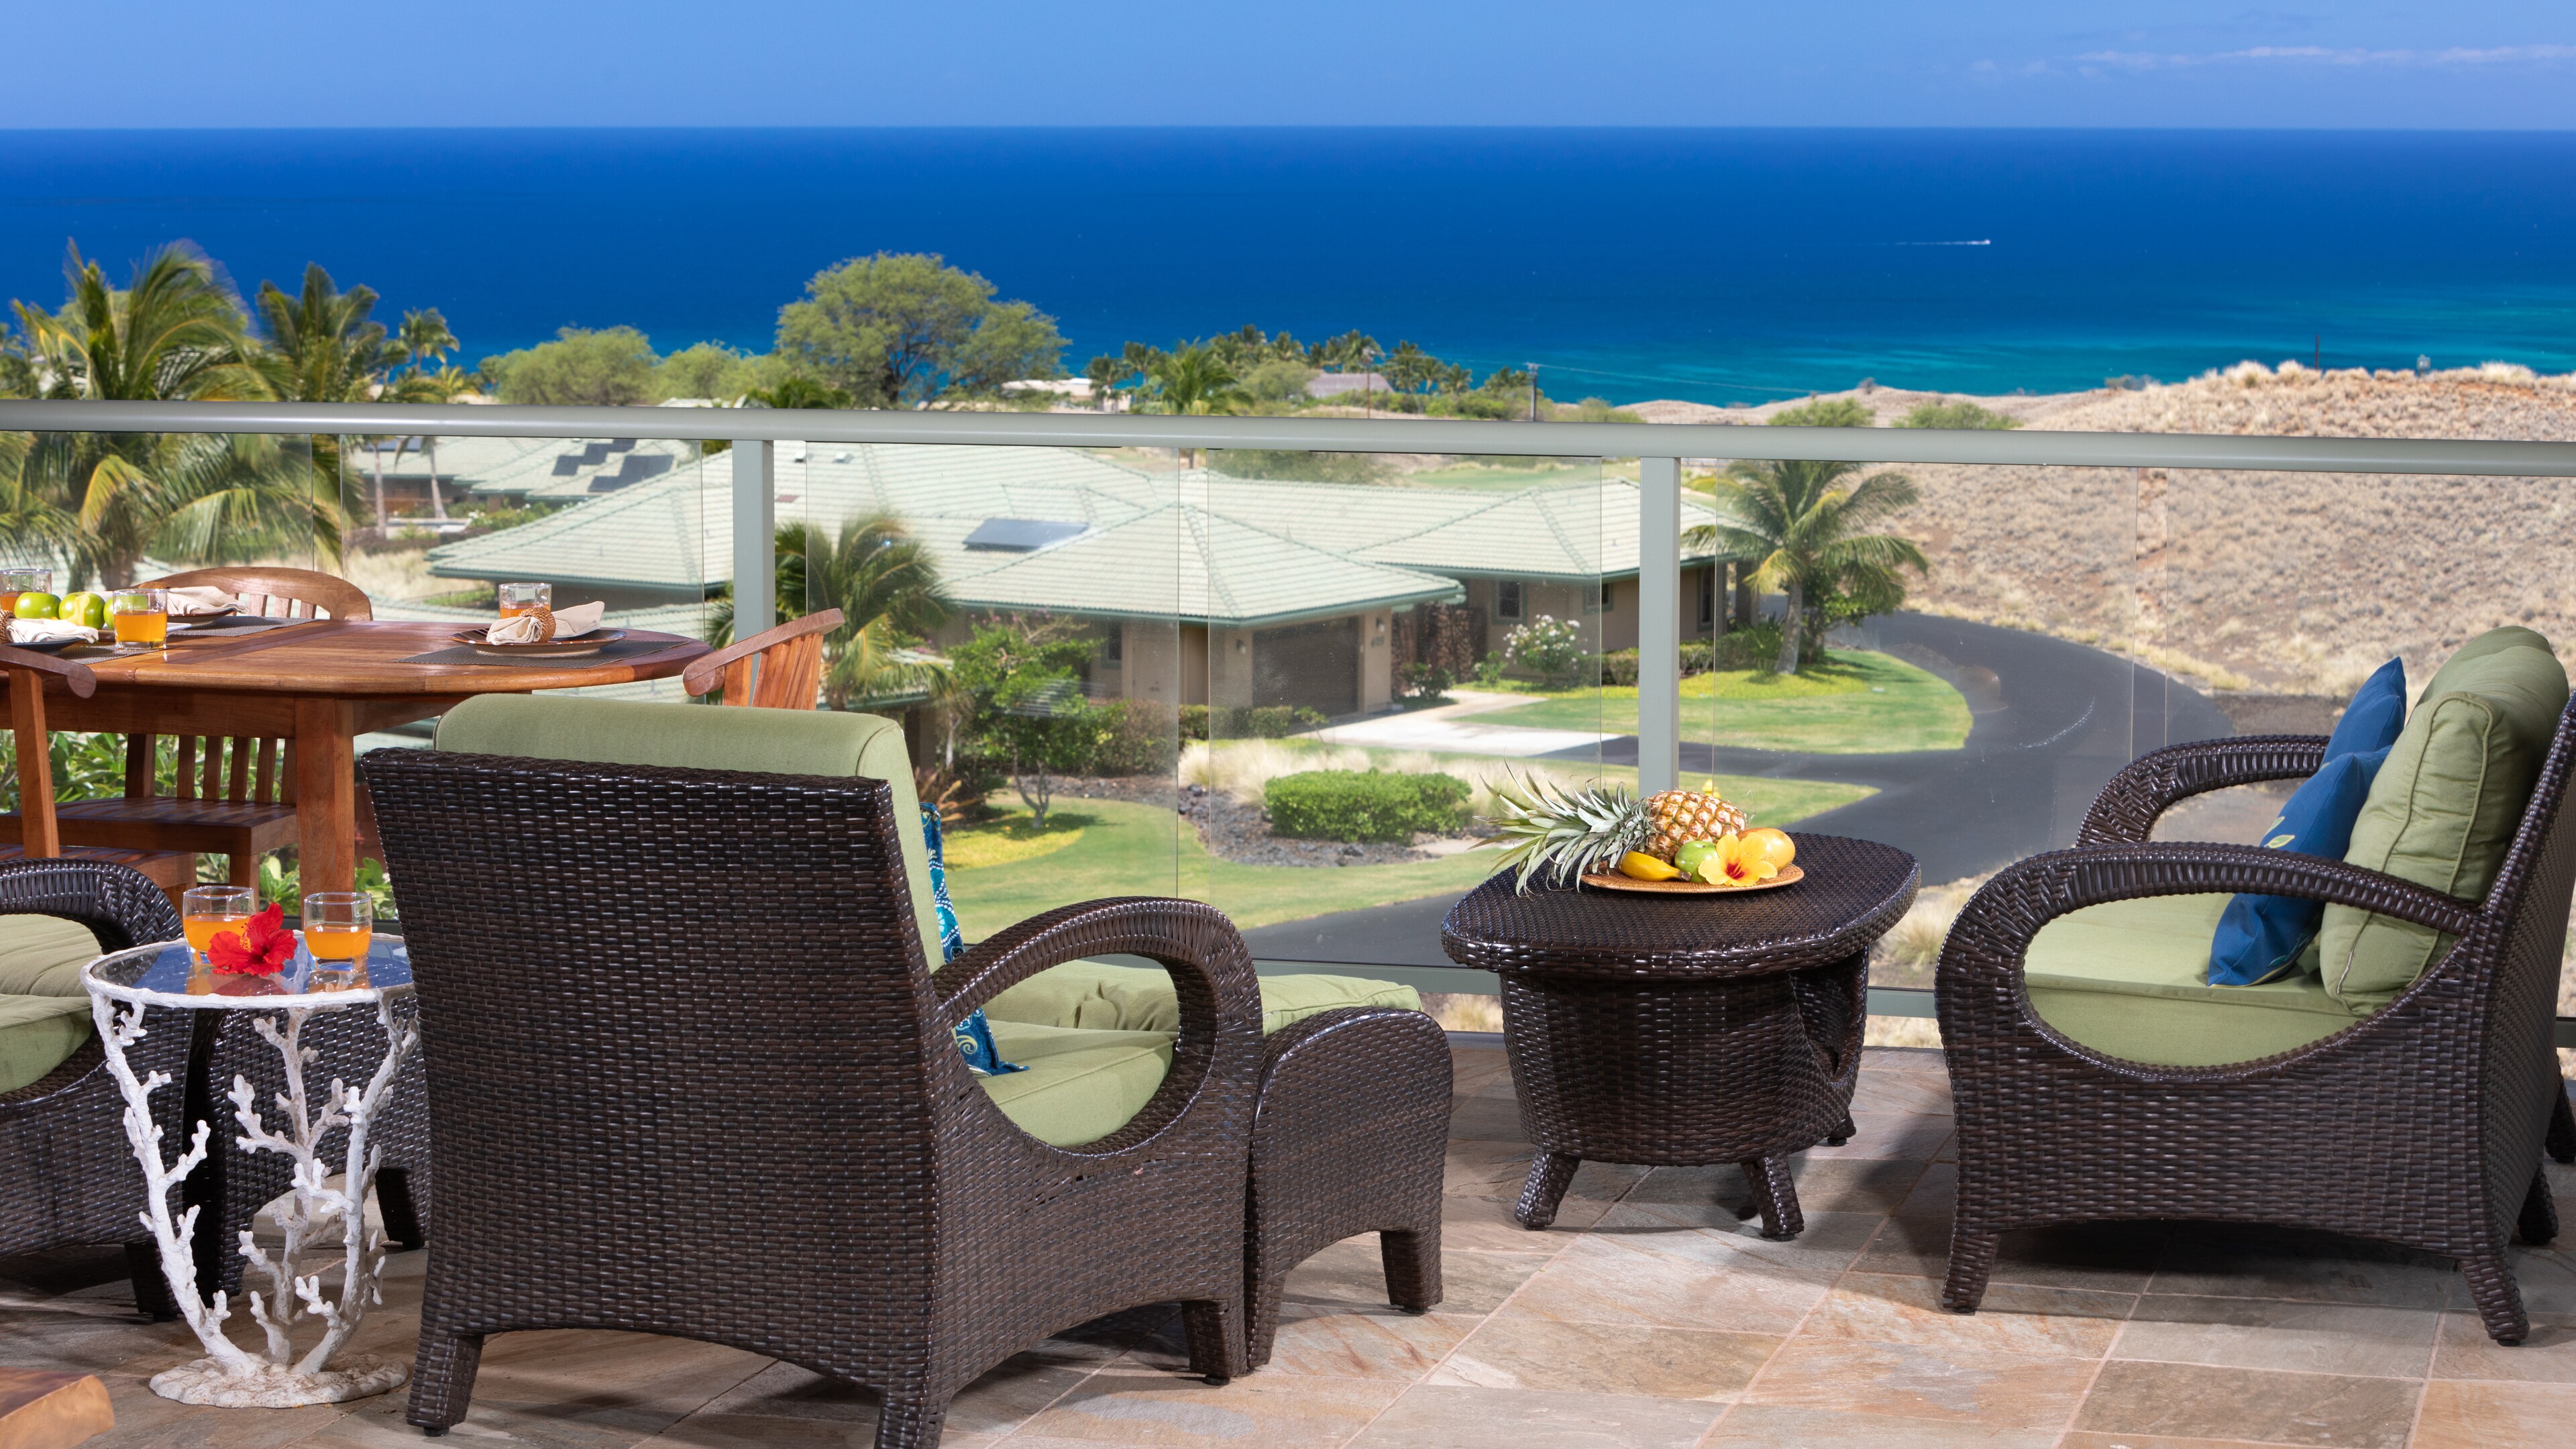 Relax days away on lanai overlooking the Beautiful Ocean.